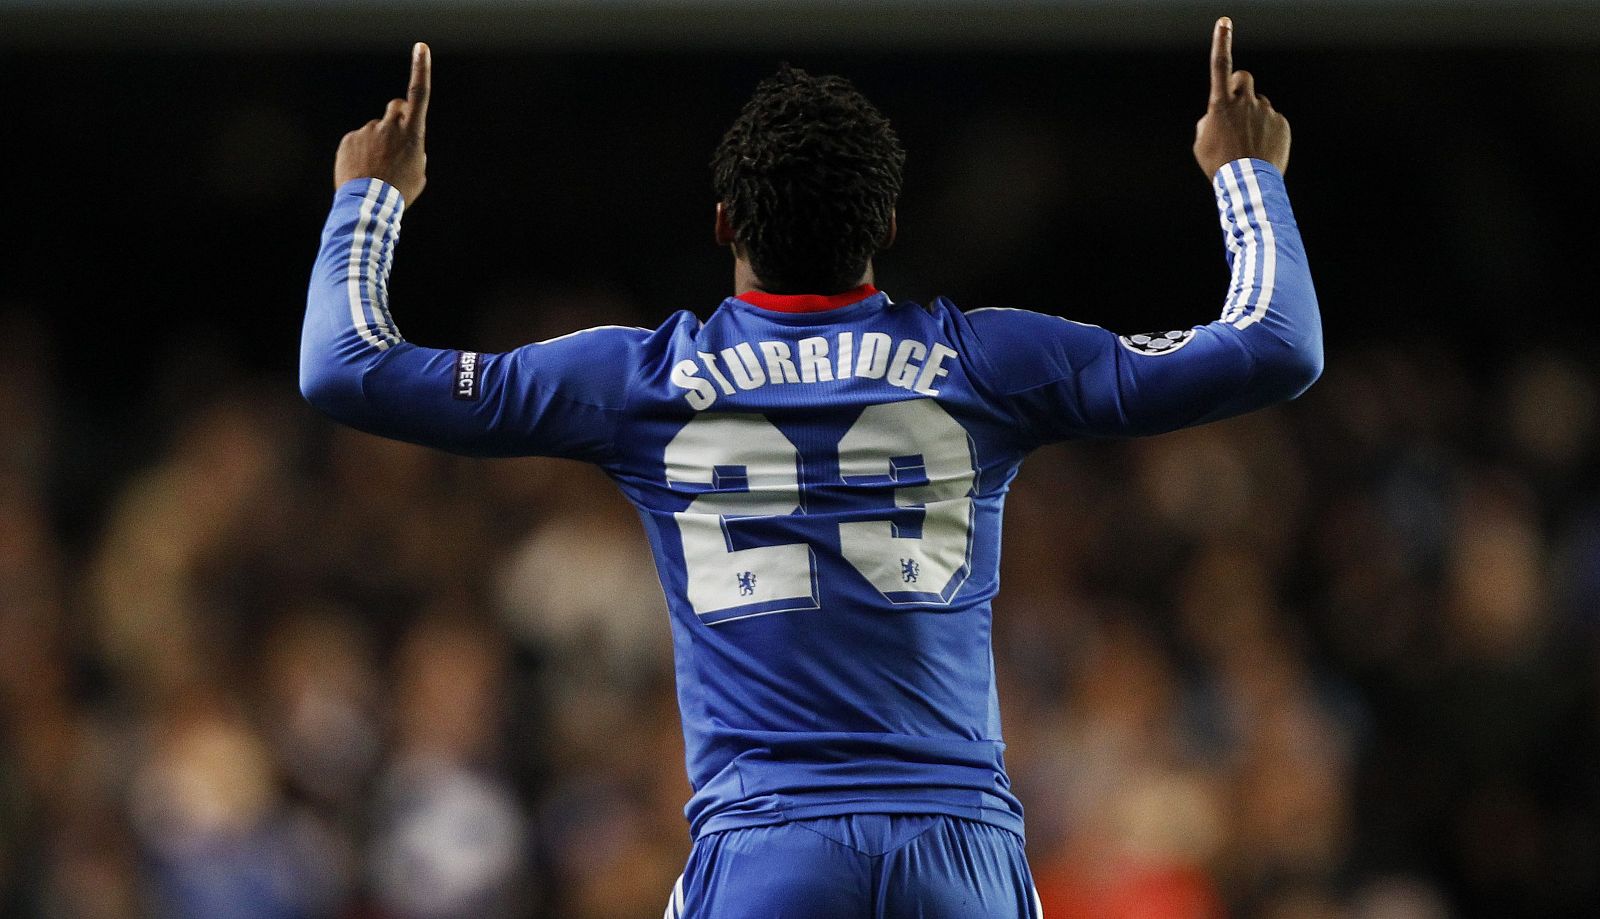 El jugador del Chelsea, Daniel Sturridge, celebra un tanto en Stamford Bridge.